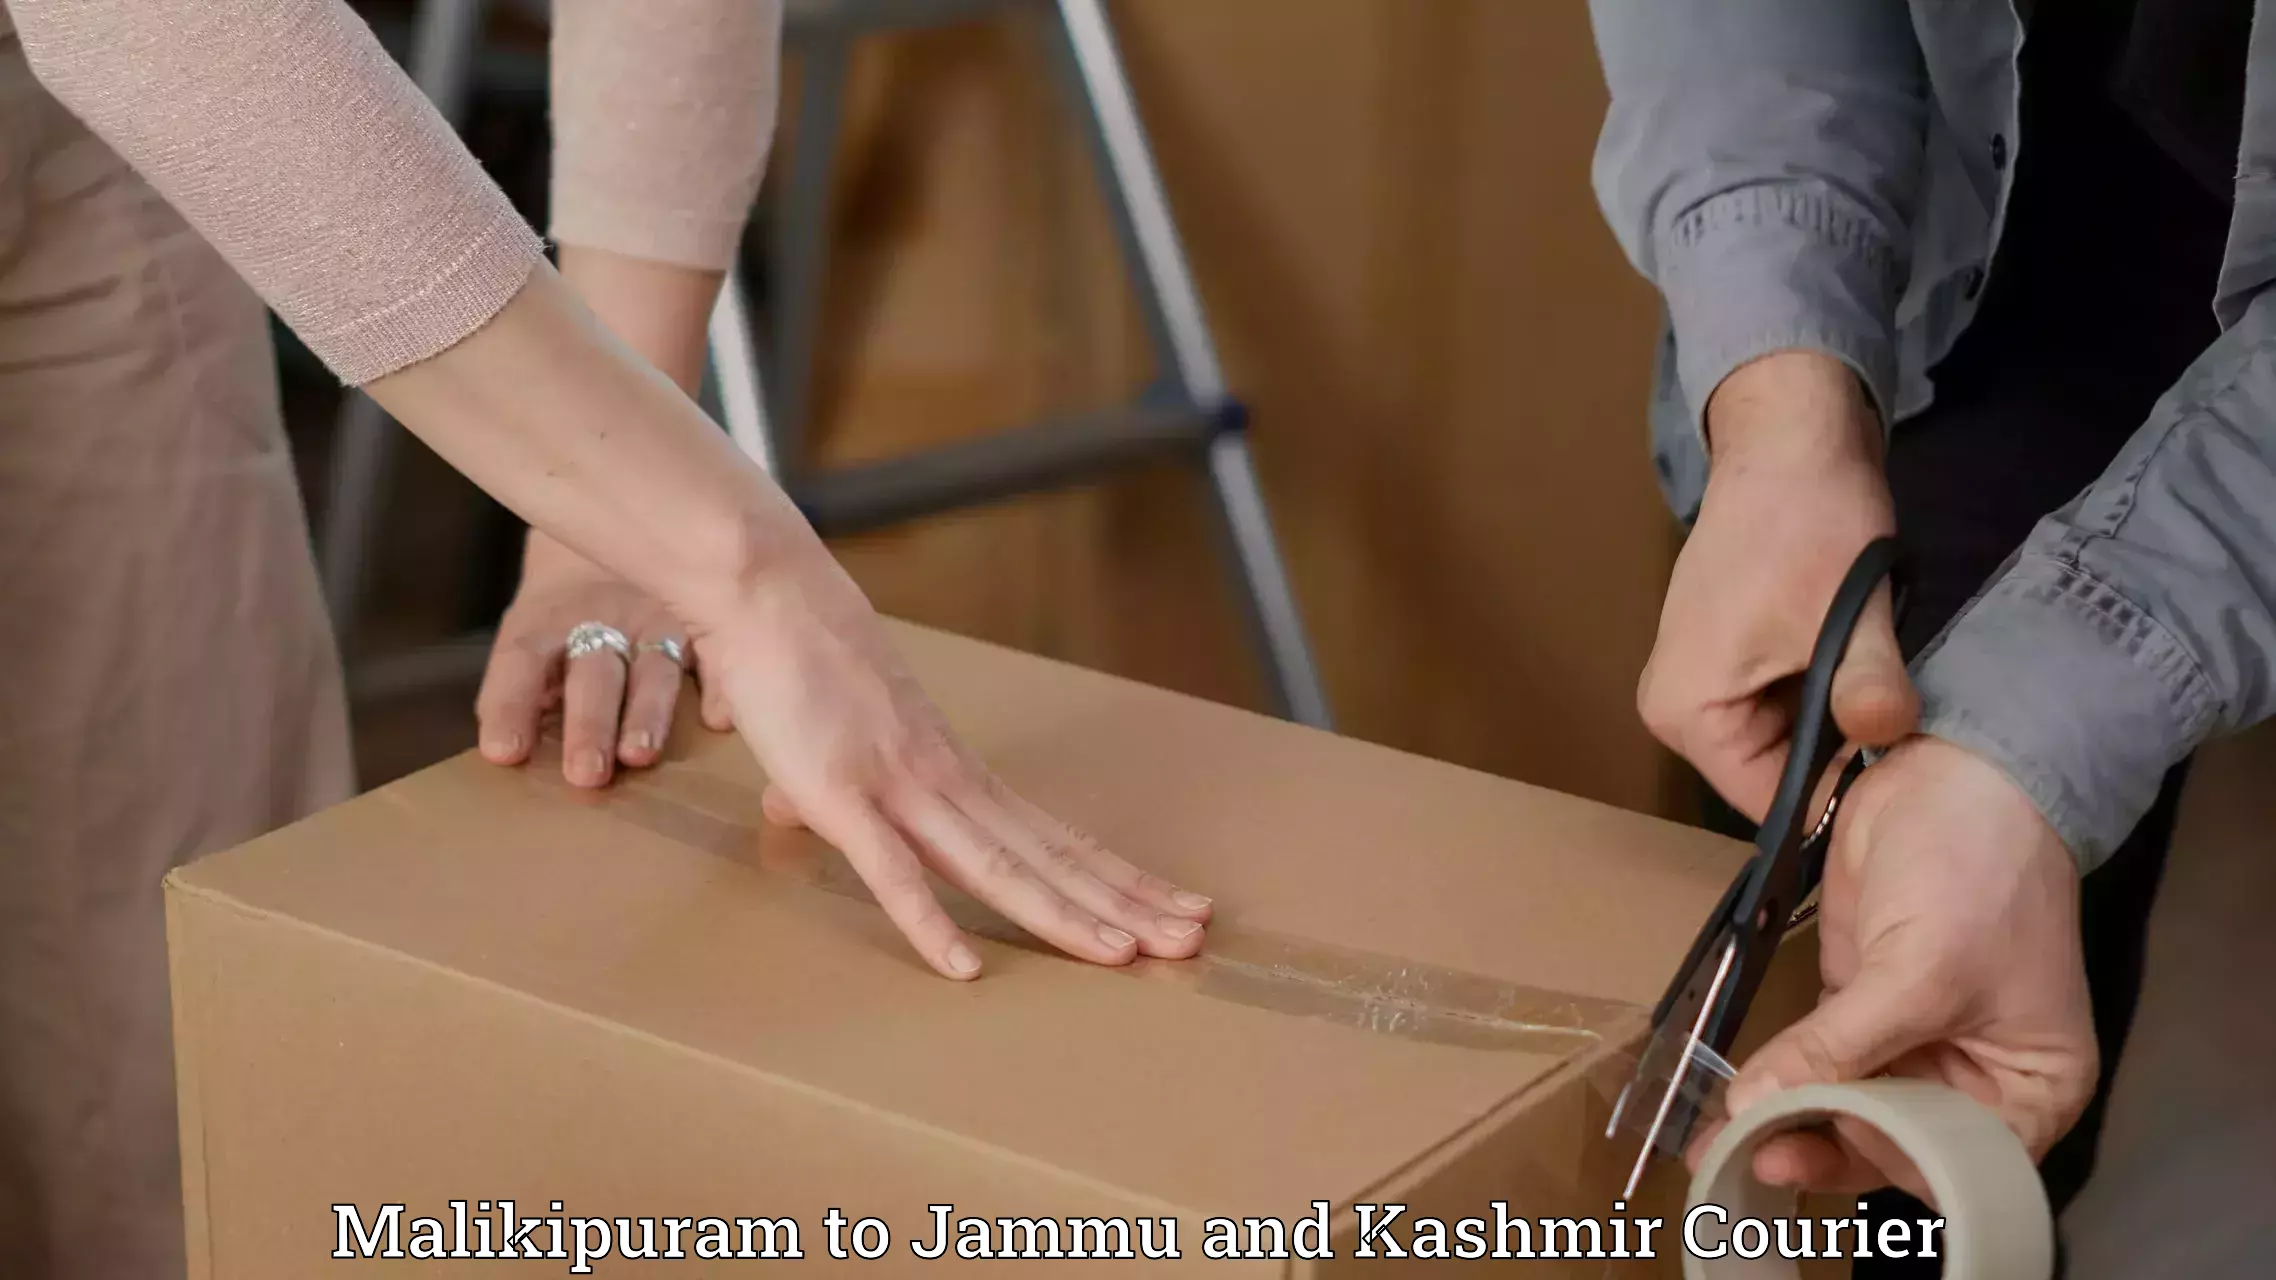 Courier service innovation Malikipuram to Jammu and Kashmir